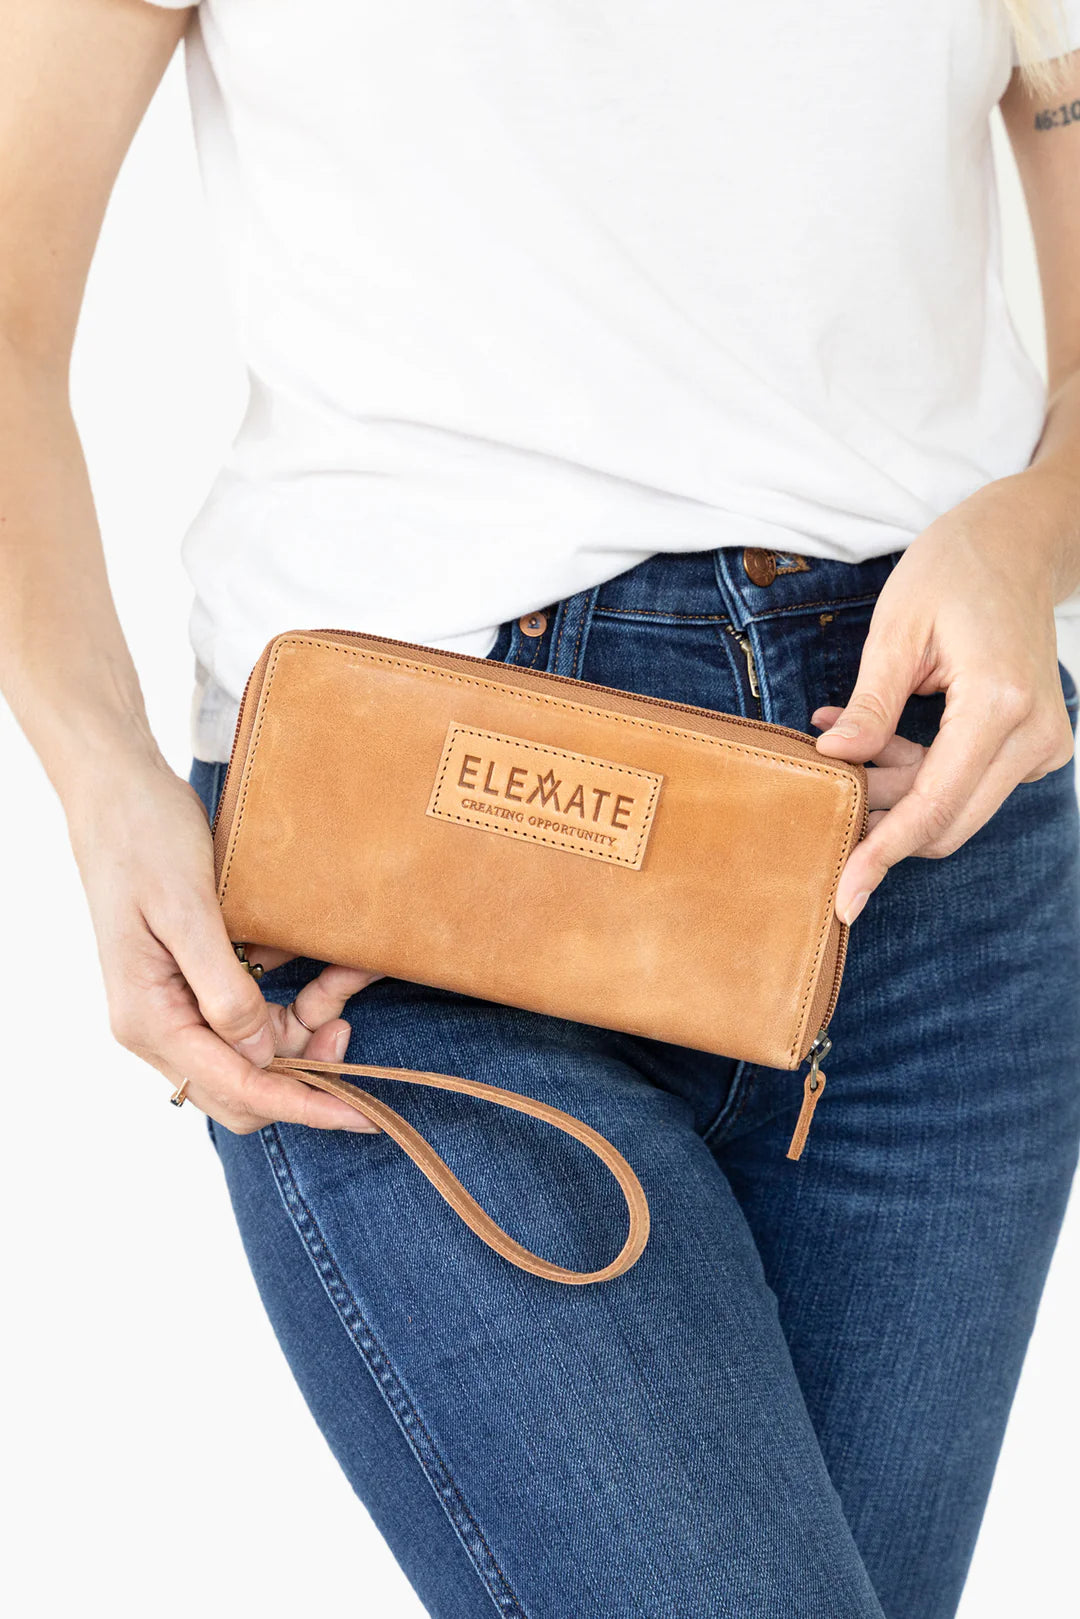 Elevate Genuine Leather Zipper Wallet